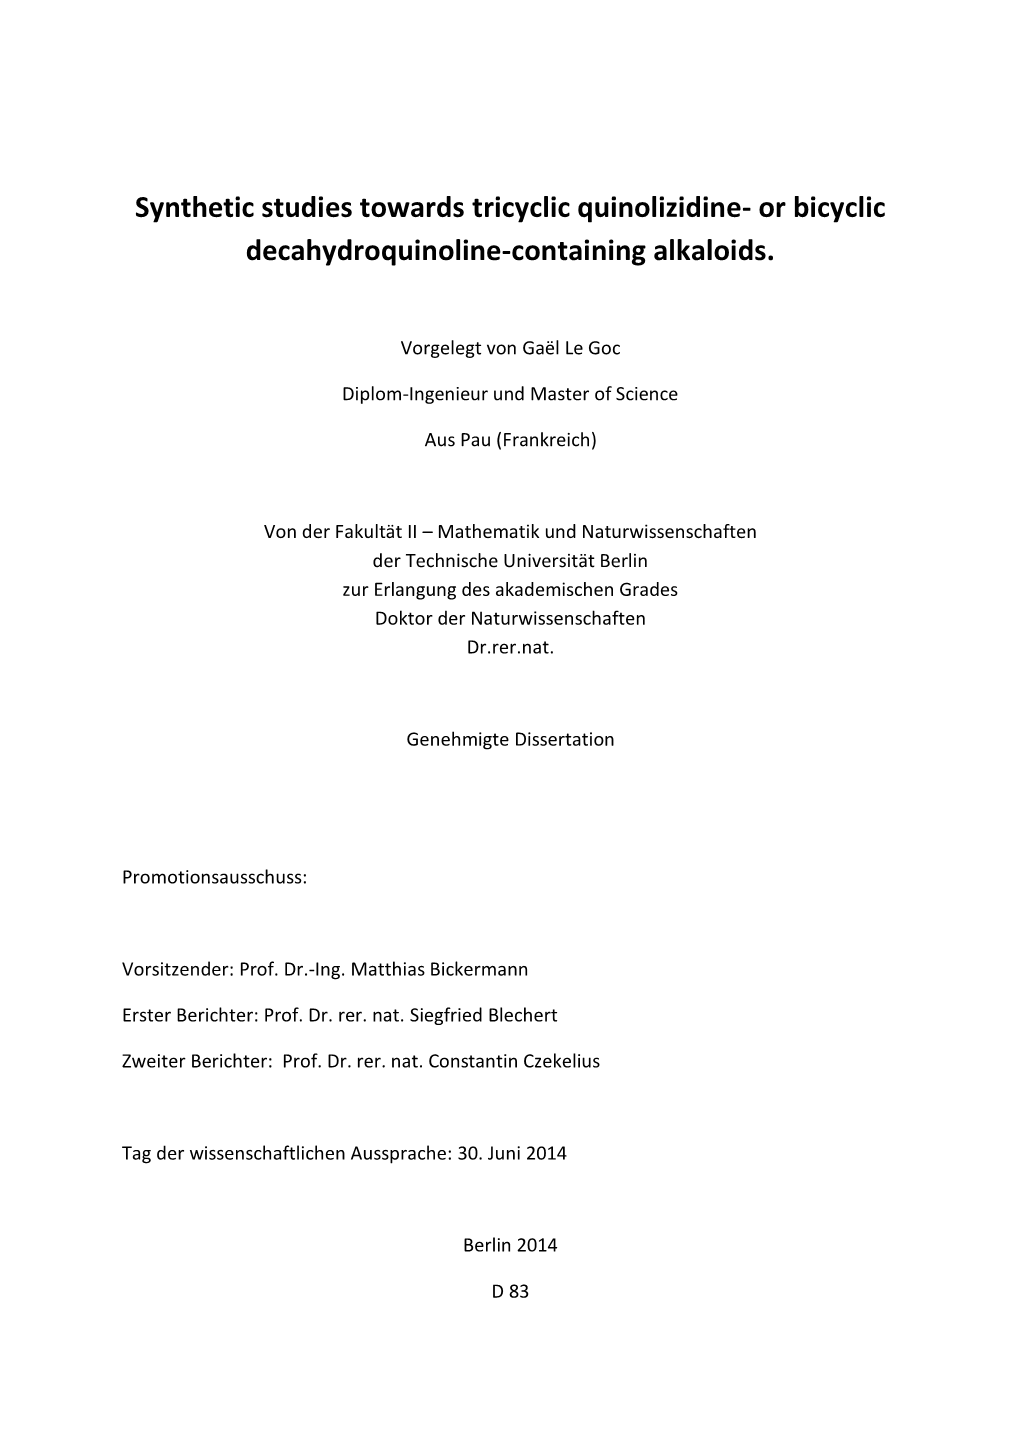 Synthetic Studies Towards Tricyclic Quinolizidine- Or Bicyclic Decahydroquinoline-Containing Alkaloids